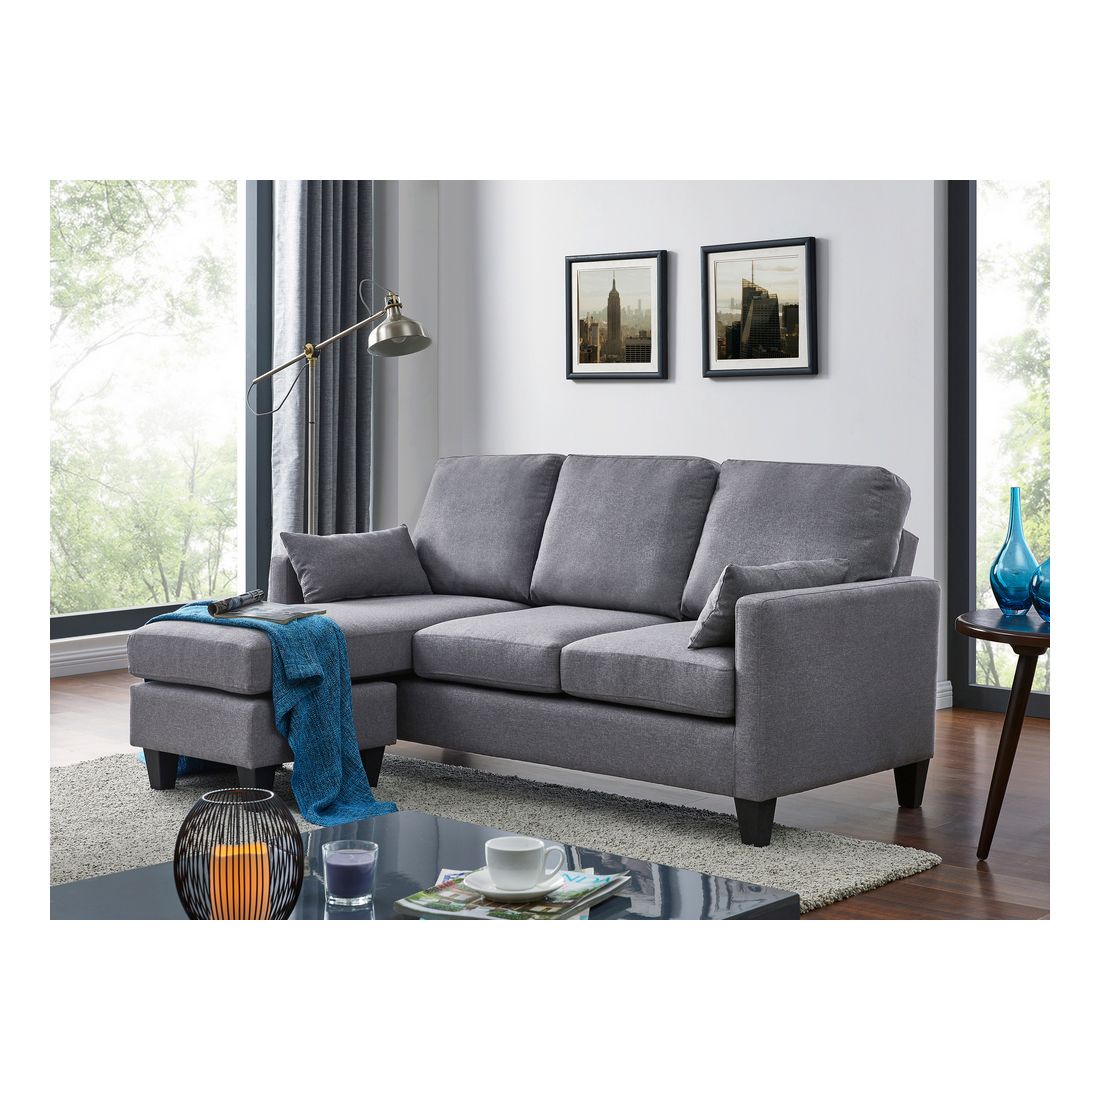 Astan Hogar gray 3-seater sofa bed 